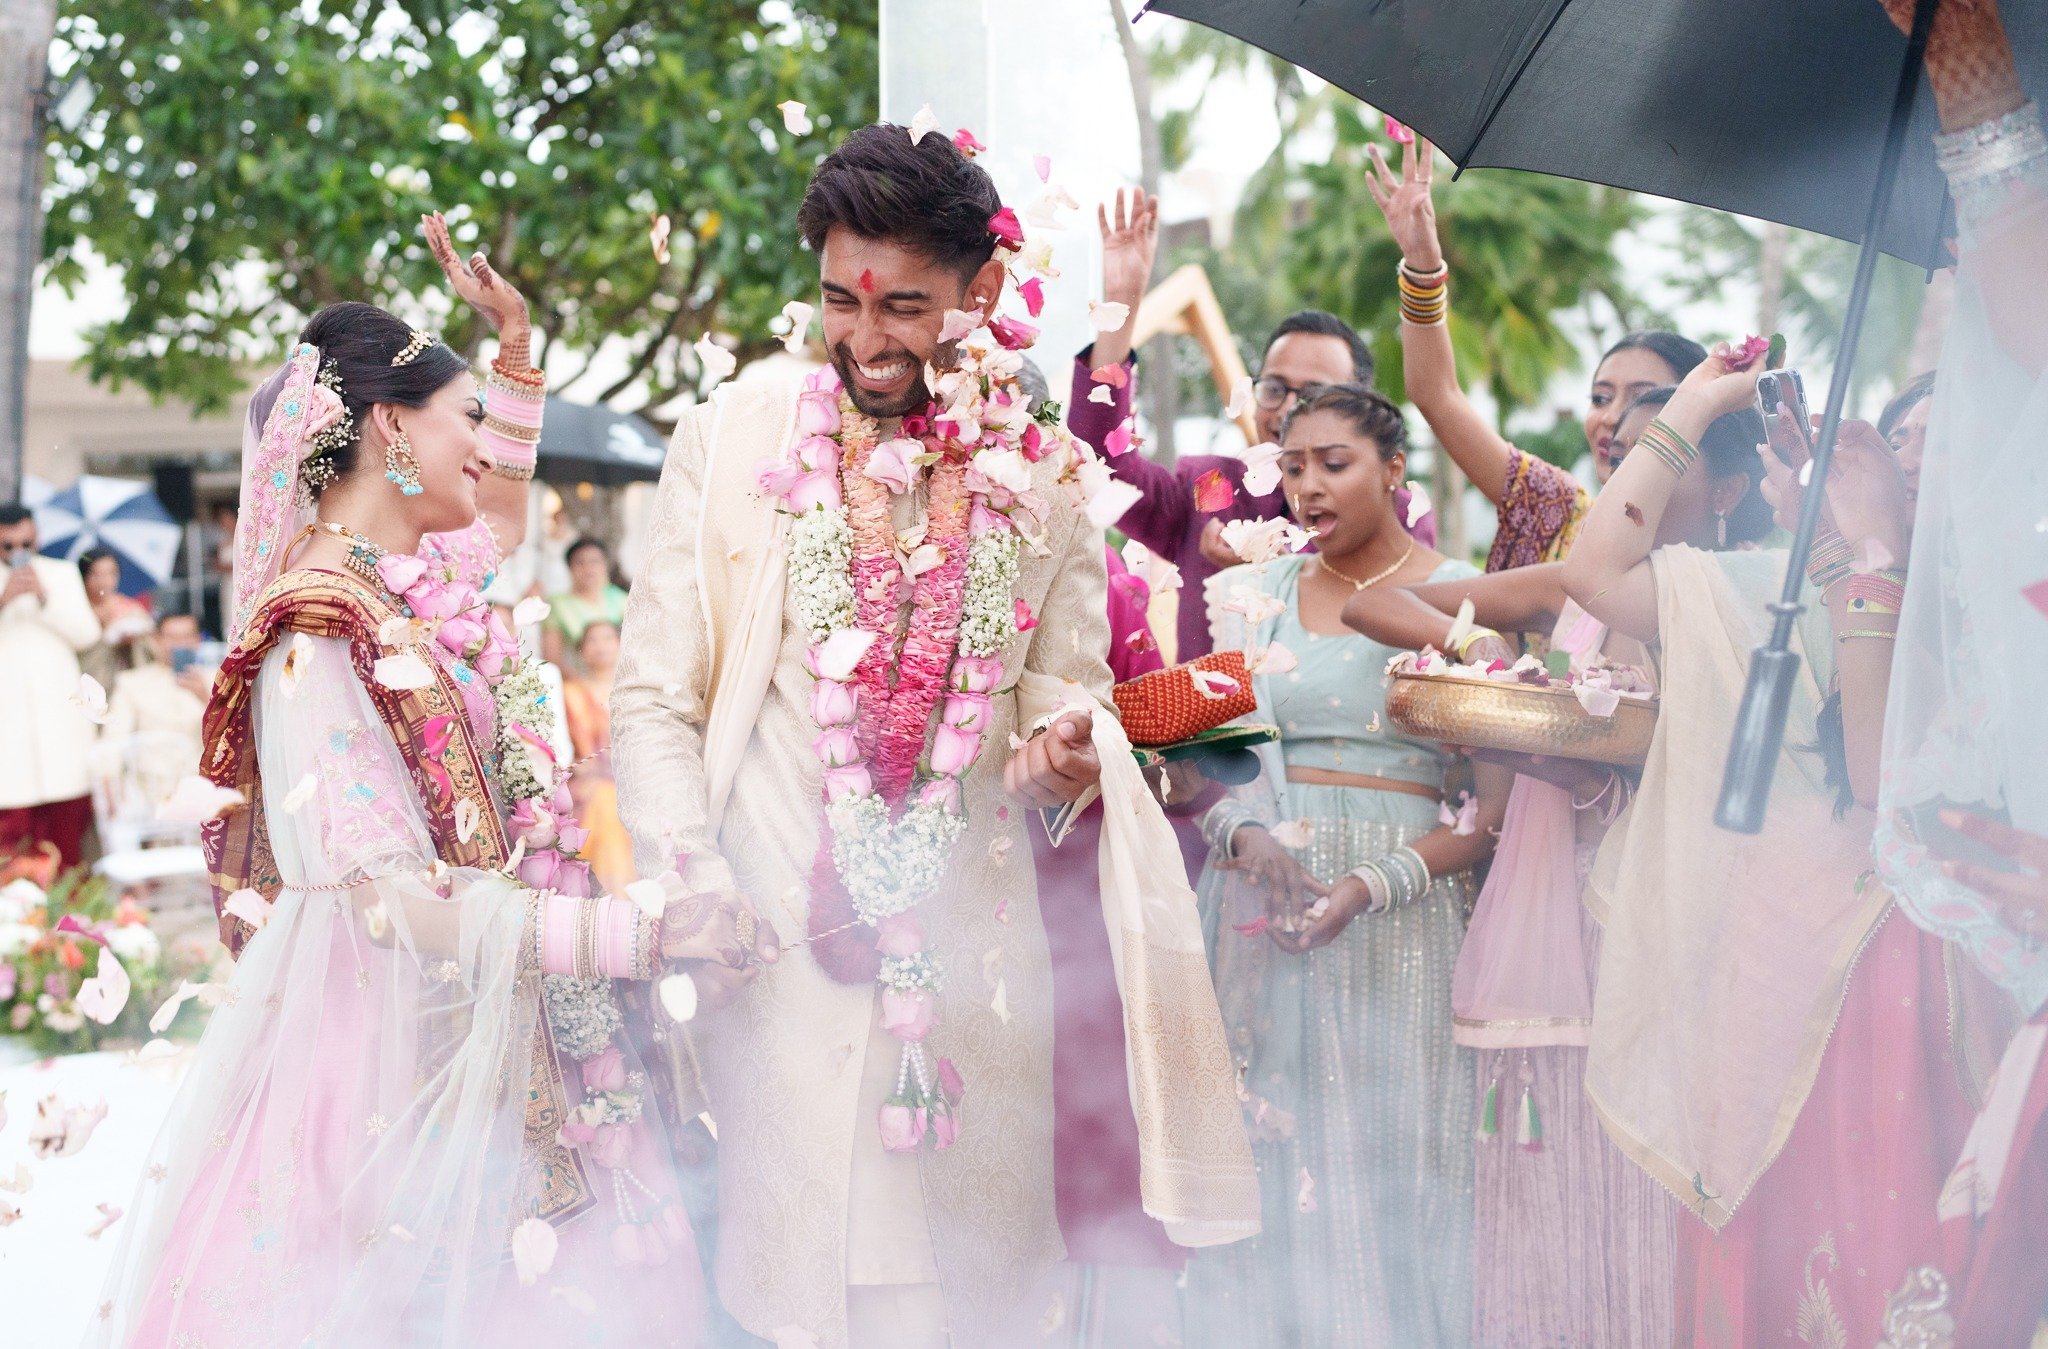 J//B - Love! 

#cheka #indianwedding #weddingsutra #utterlyengaged #weddinglegends #belovedstories #wedphotoinspiration #loveauthentic #loveintentionally #destinationwedding #weddinginspo #fearlessphotographer #bestkenyanweddingphotographer #destinat